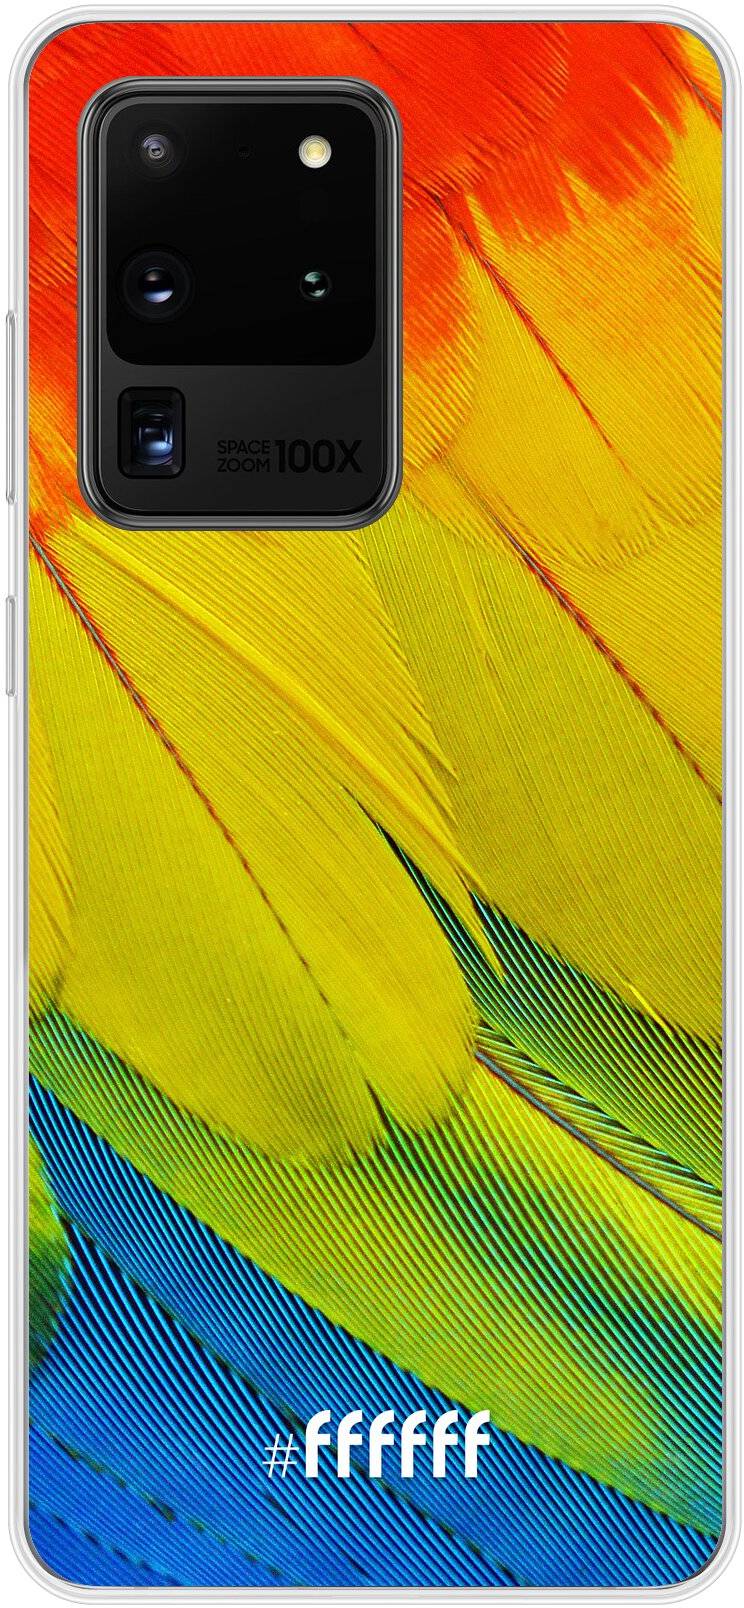 Macaw Hues Galaxy S20 Ultra